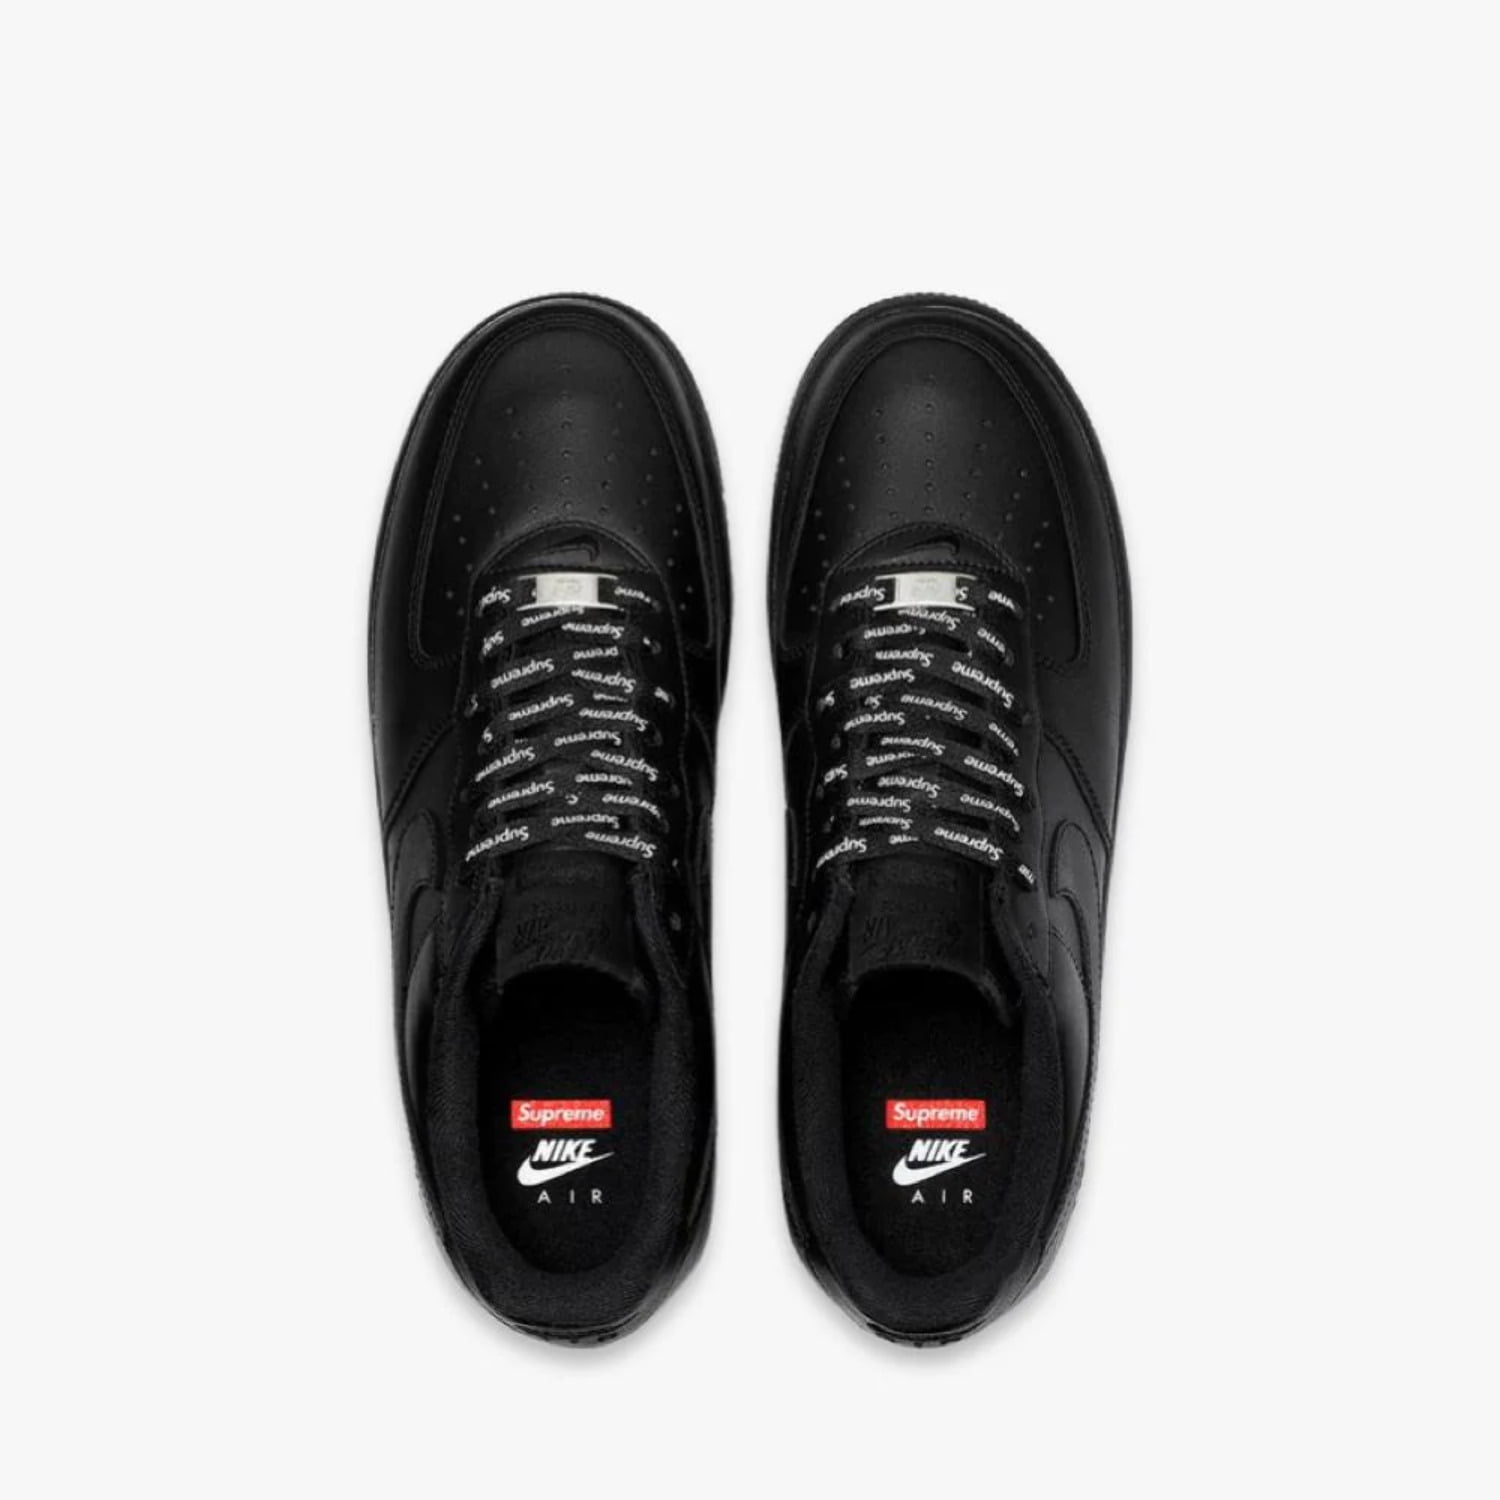 Supreme x Nike Air Force 1 Low “Box Logo Black” CU9225-001 